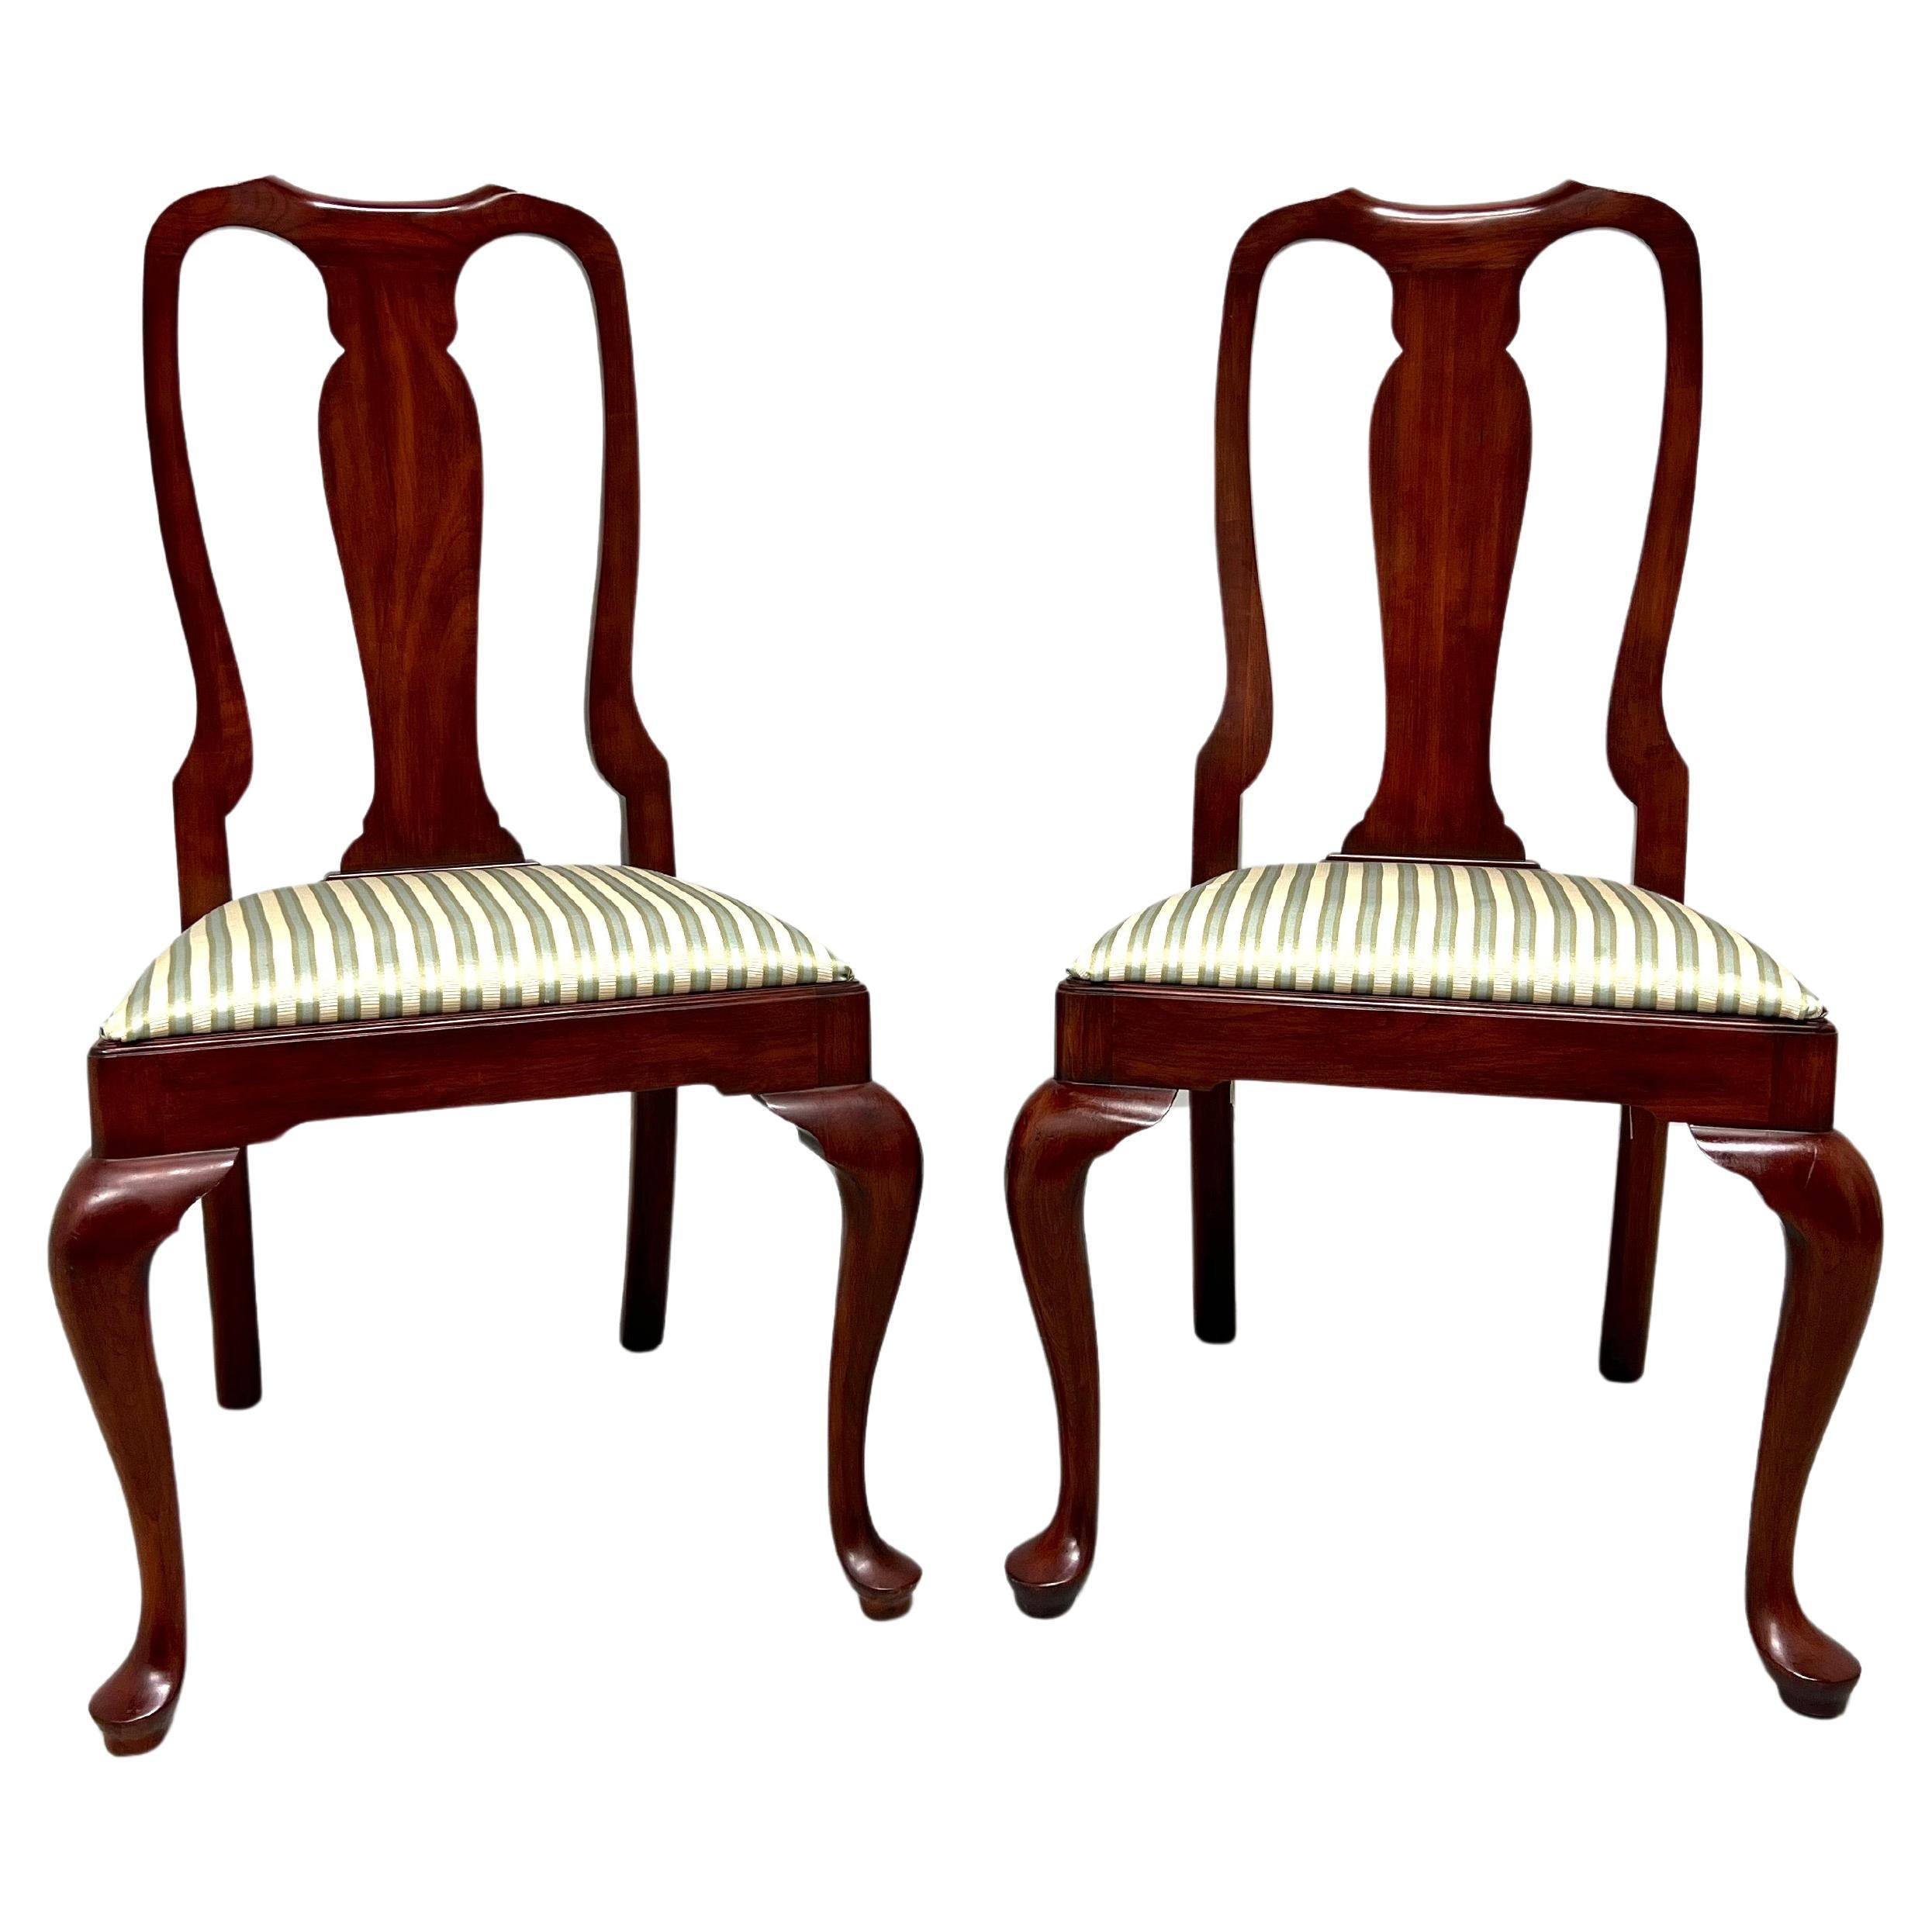 HENKEL HARRIS 105S 24 Wild Black Cherry Queen Anne Dining Side Chairs - Pair A